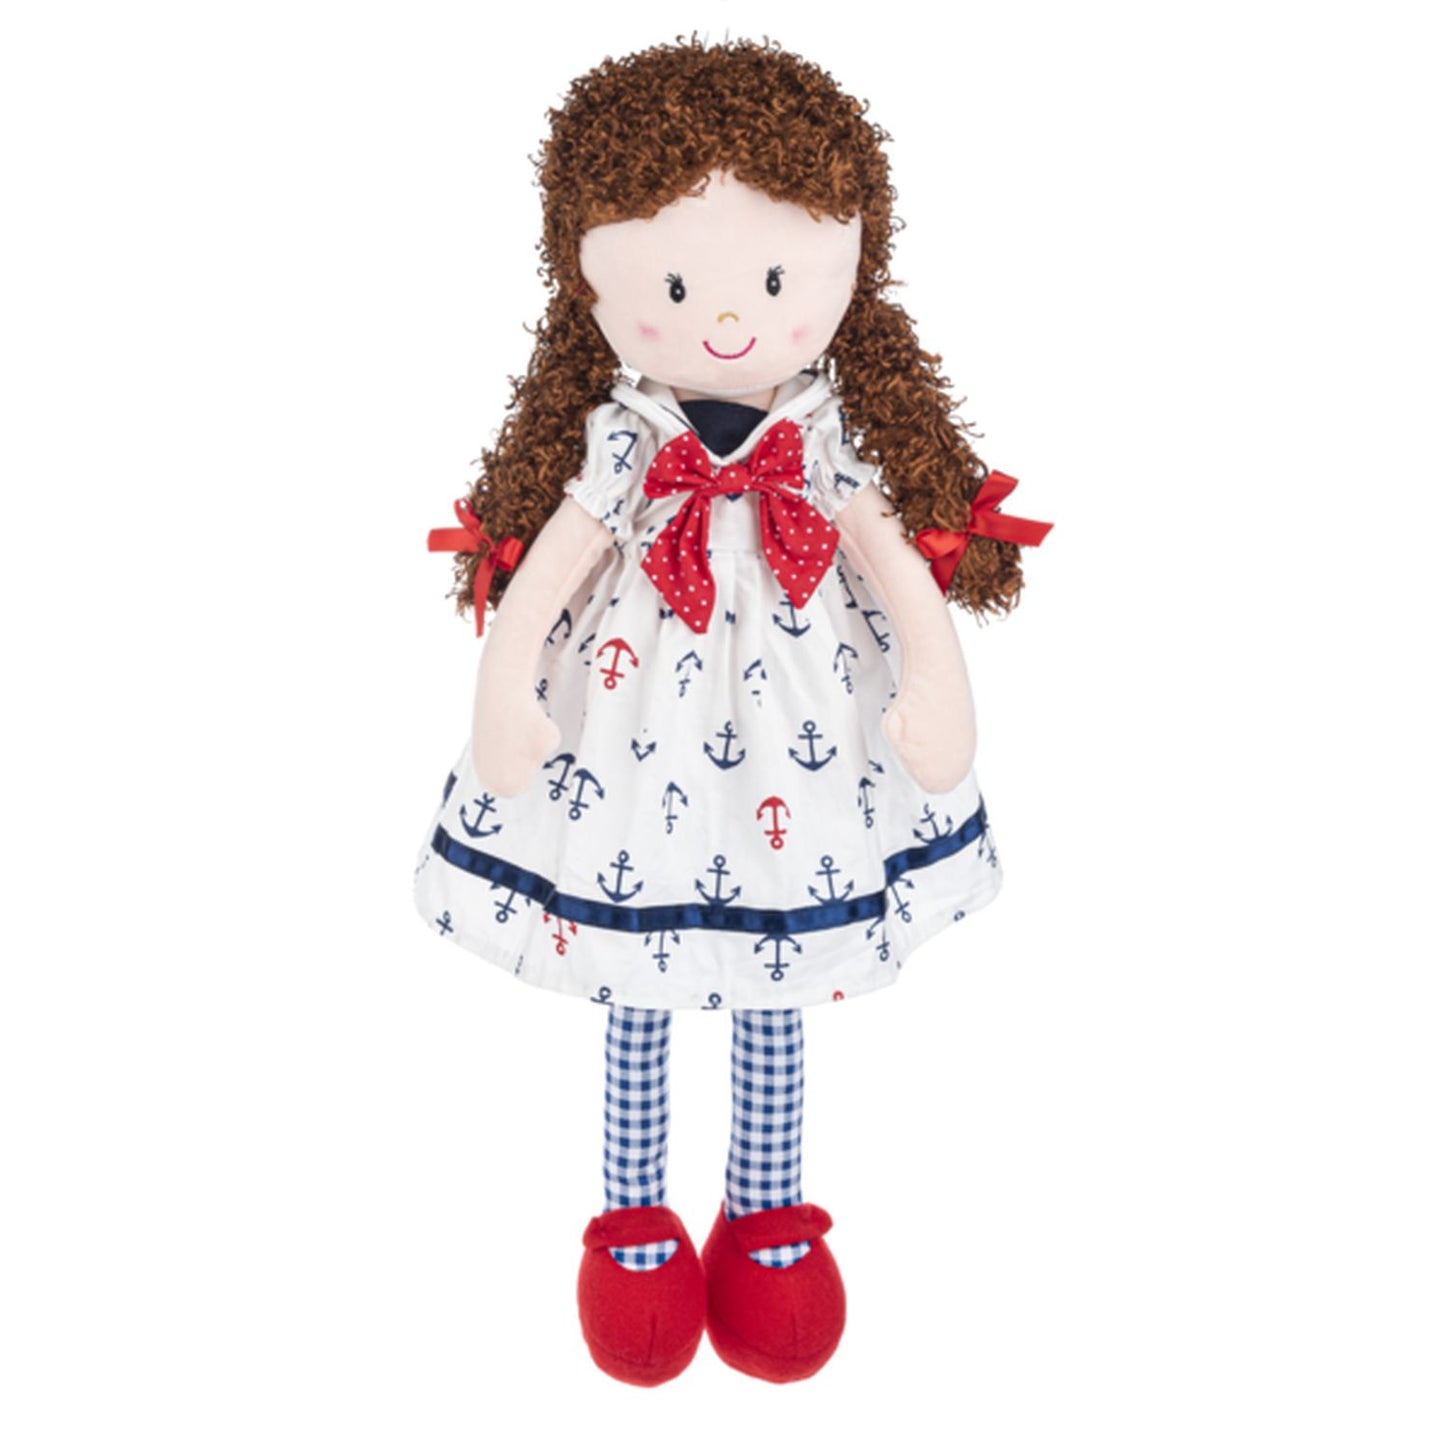 Ganz Sailor Doll Plush Toy